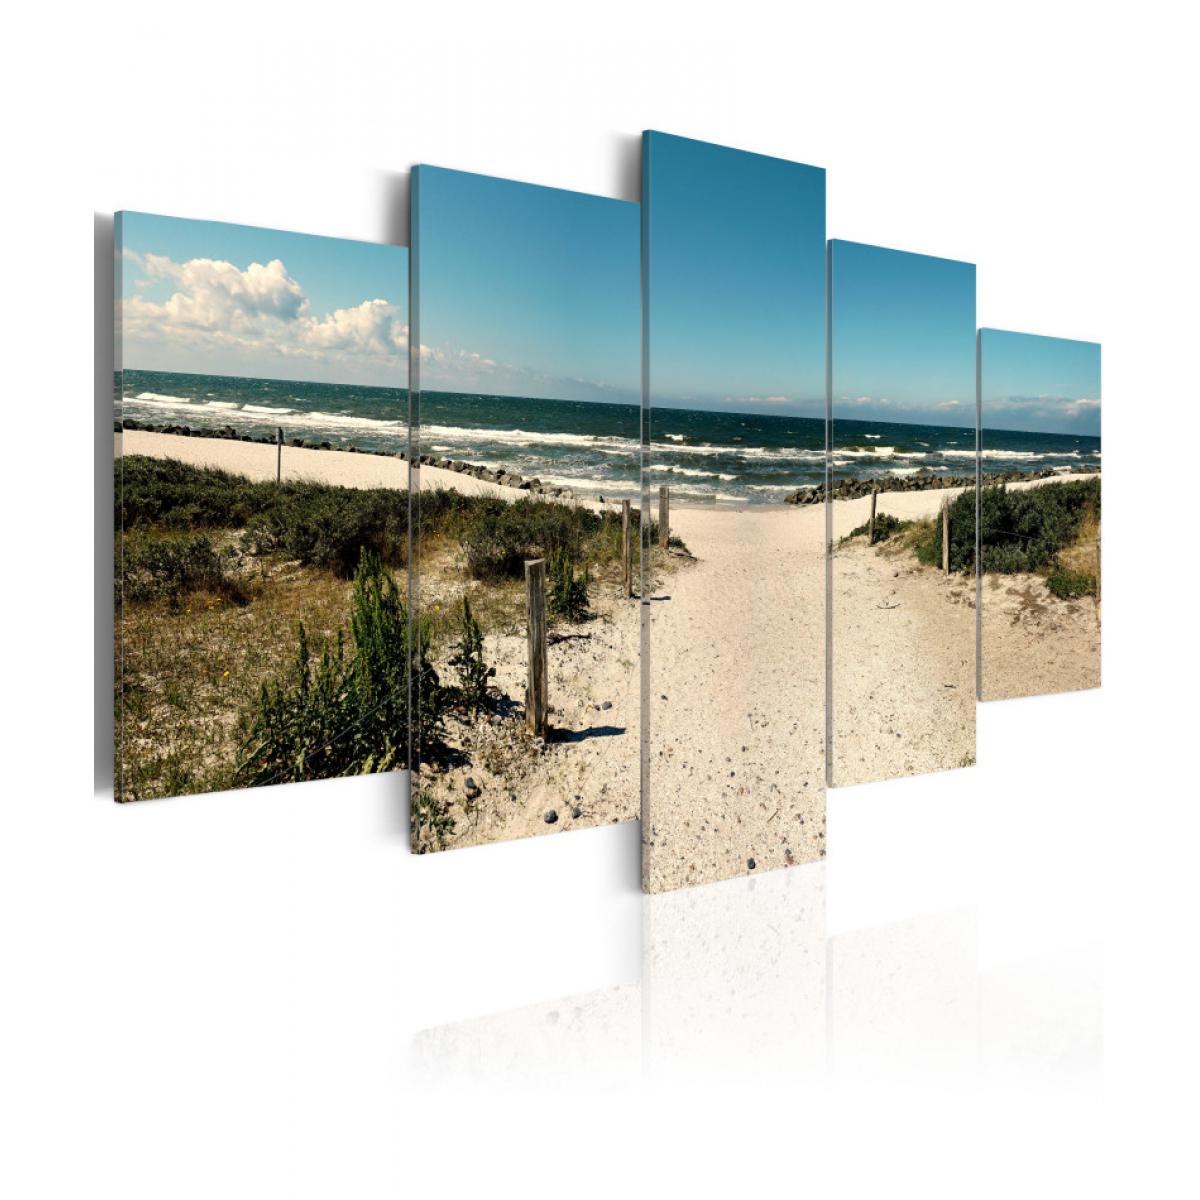 Artgeist - Tableau - The Beach of Dreams 200x100 - Tableaux, peintures